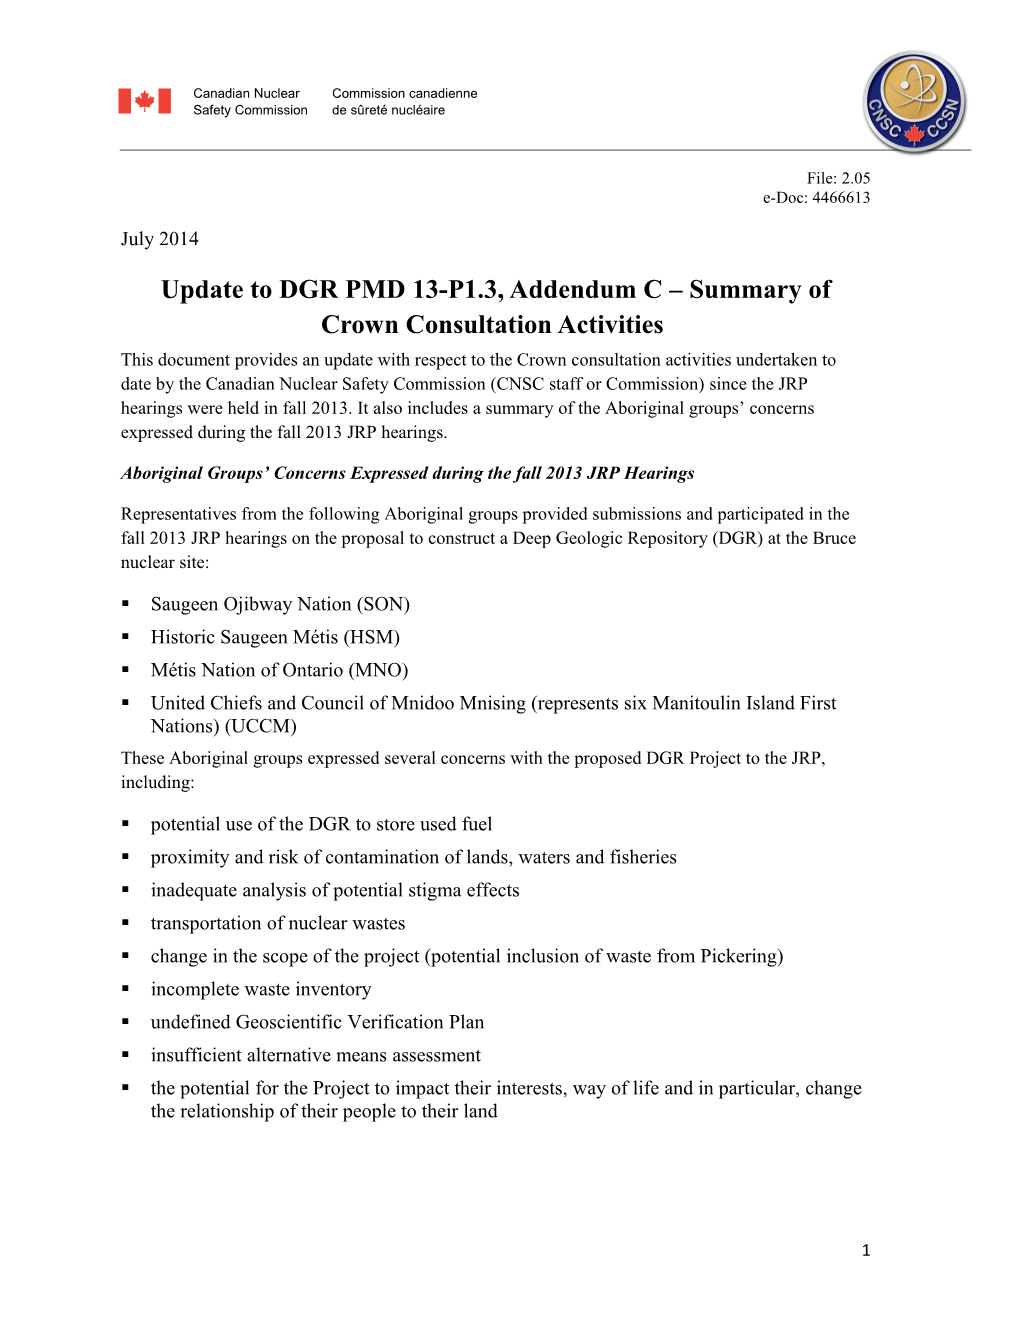 Update to DGR PMD 13-P1.3, Addendum C Summary of Crown Consultation Activities